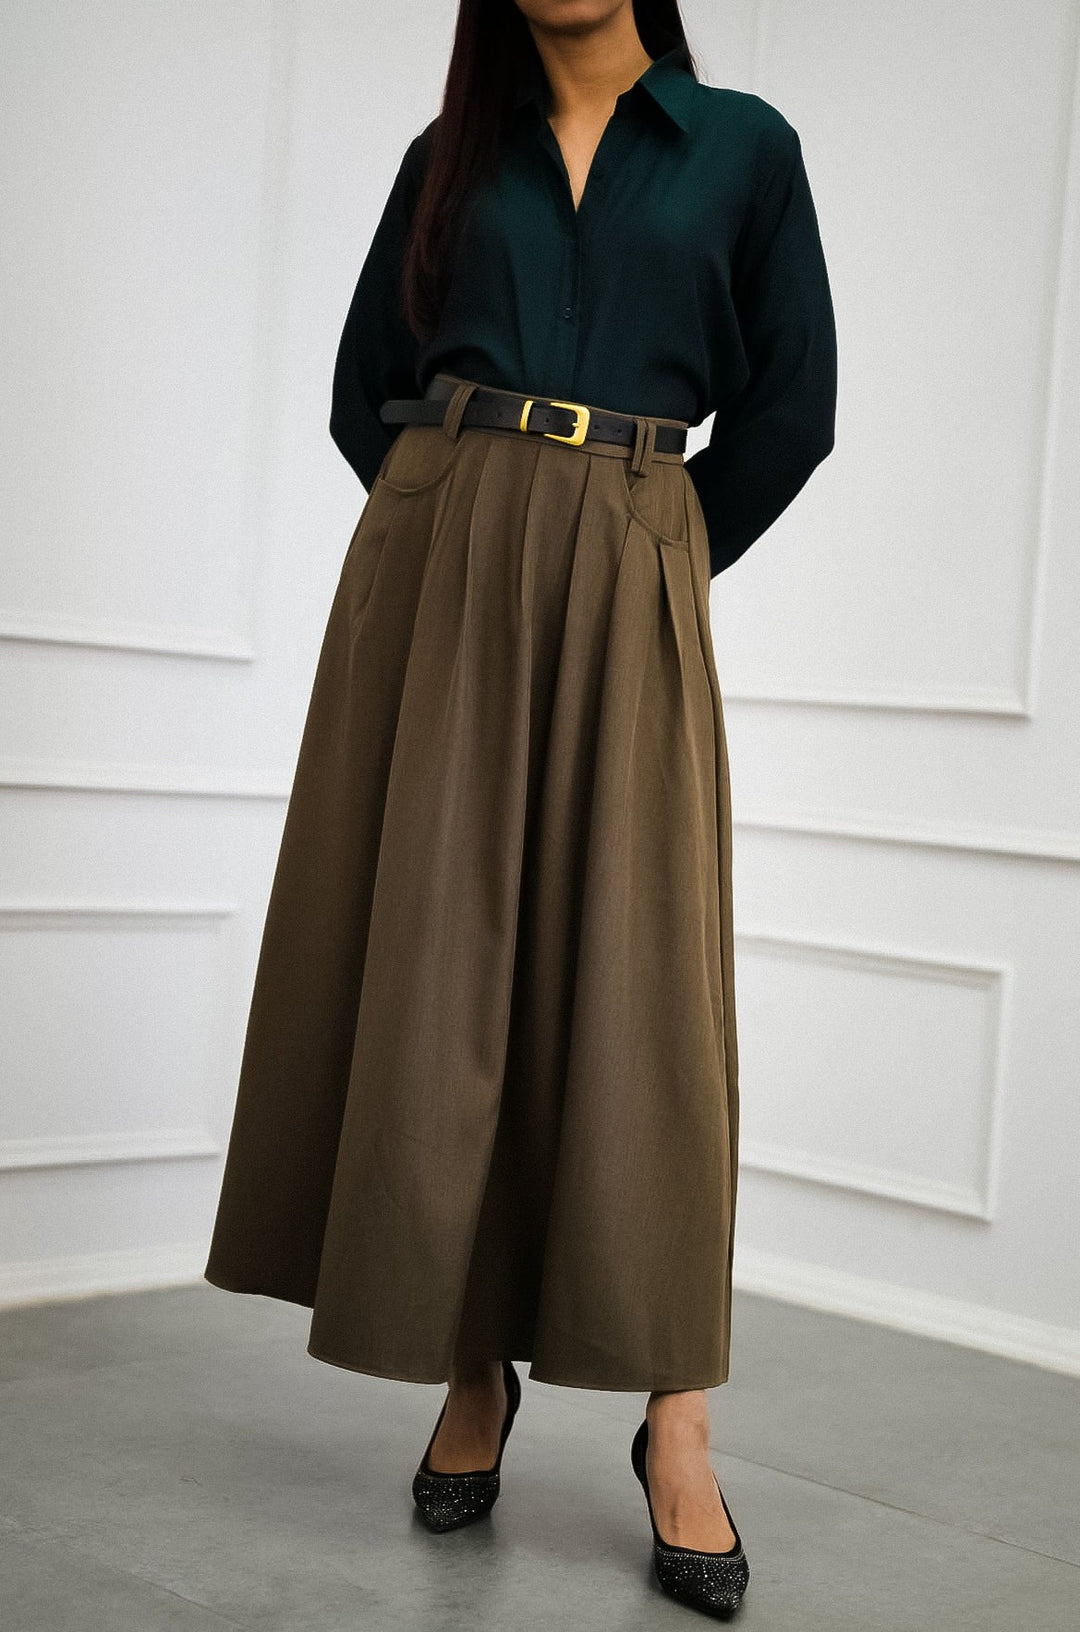 Chic Sepia Pleated Maxi Skirt Stylish Women's Clothing